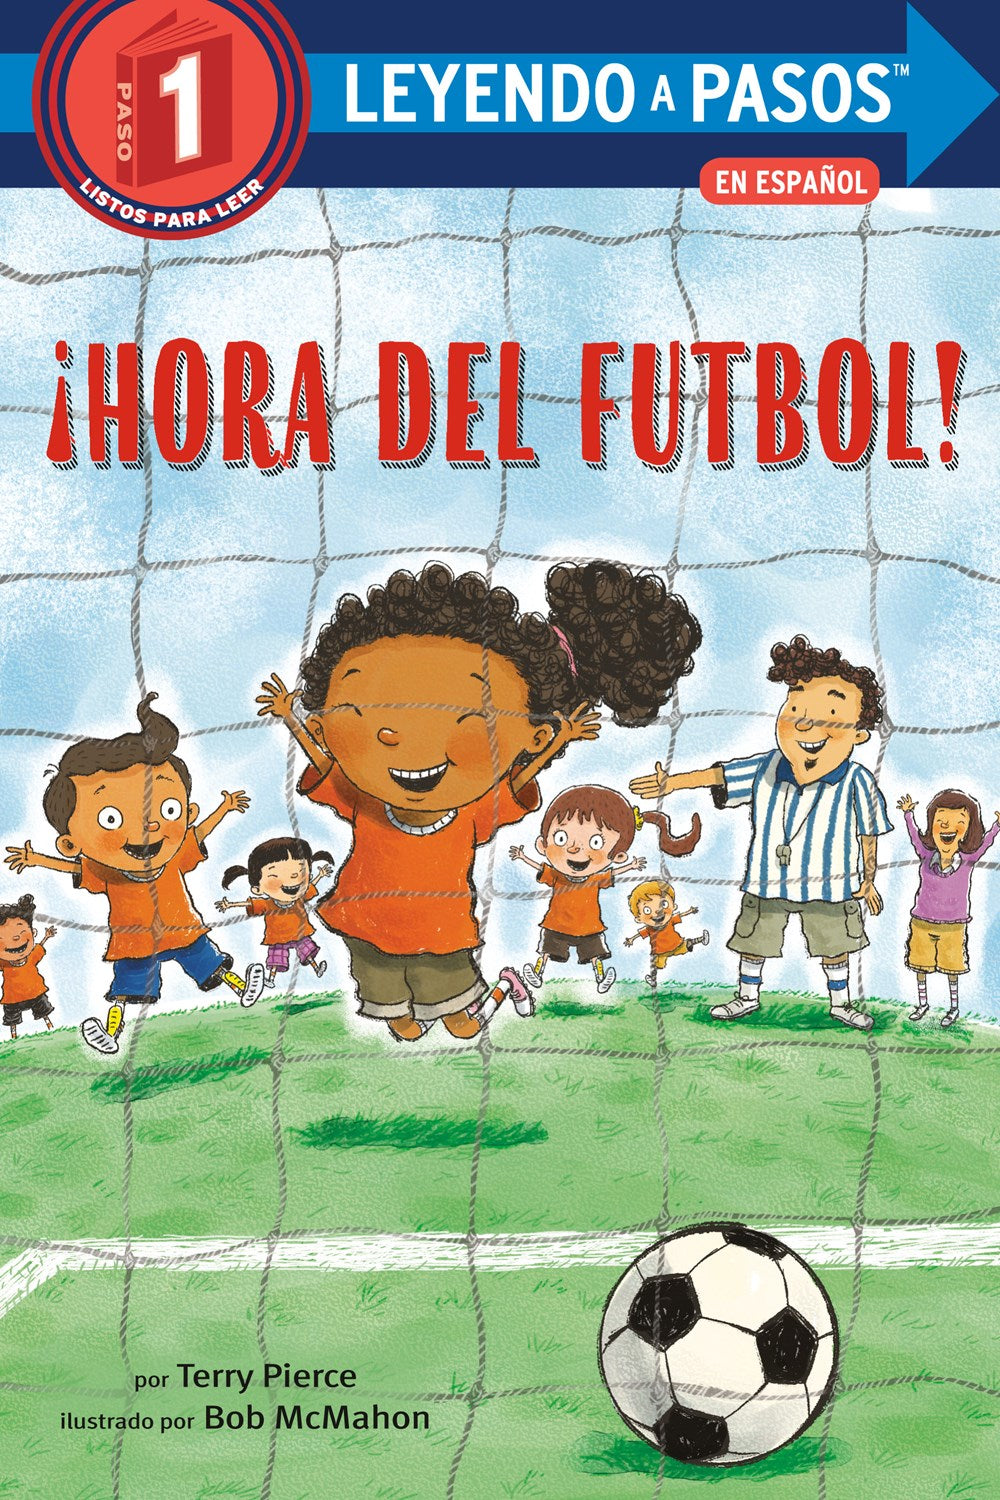 ¡Hora del fútbol! (Soccer Time! Spanish Edition)